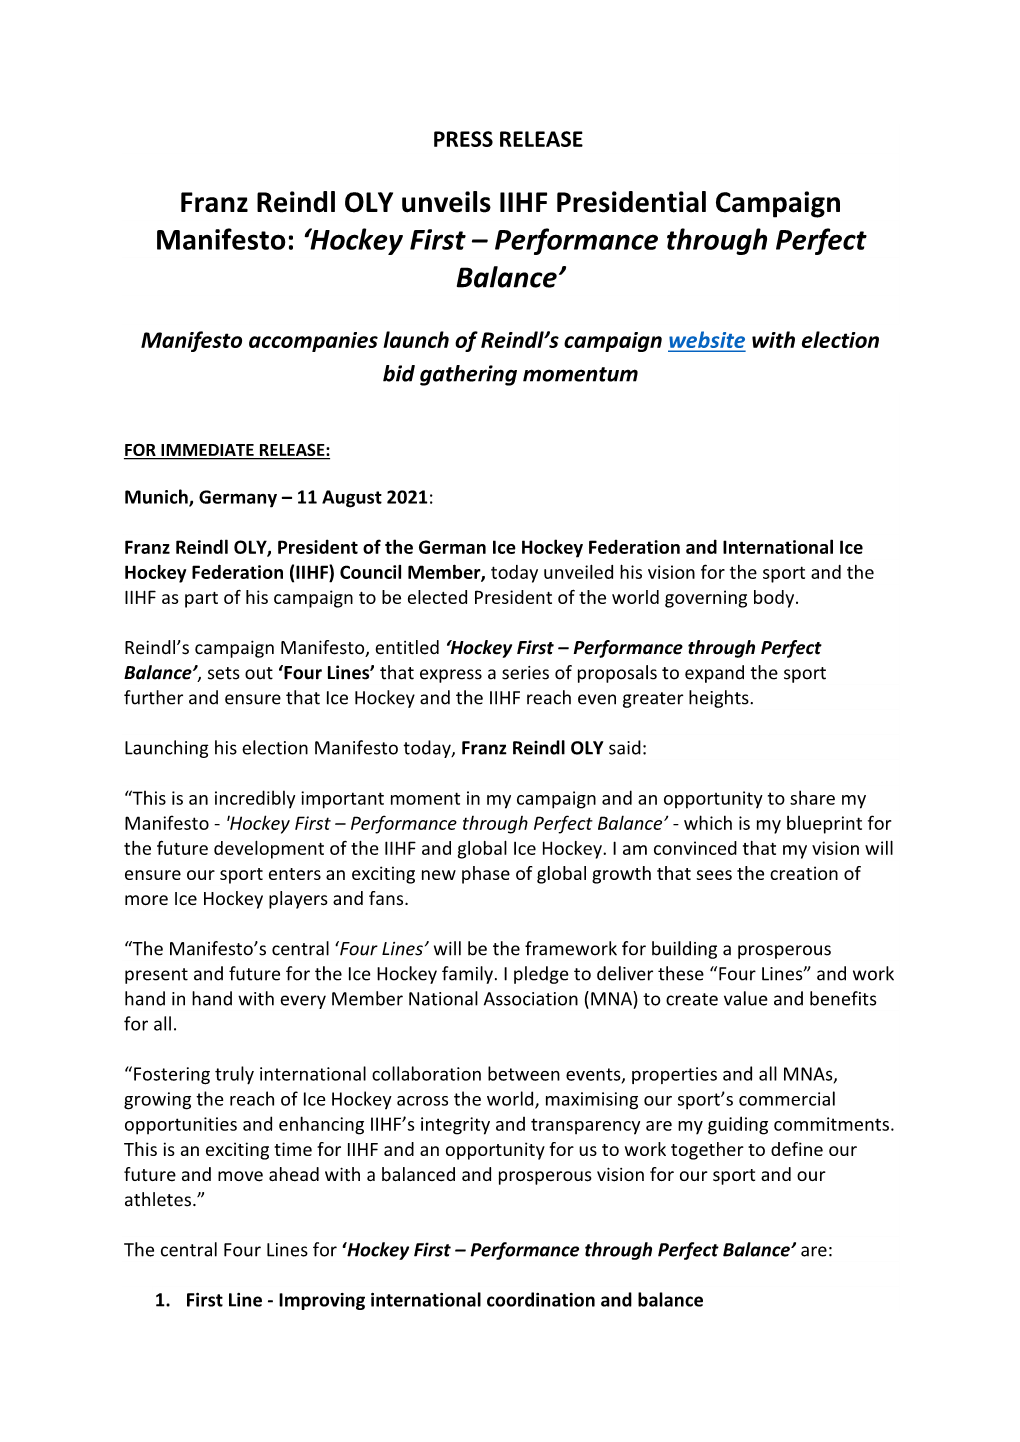 Franz Reindl OLY Unveils IIHF Presidential Campaign Manifesto: 'Hockey First – Performance Through Perfect Balance'